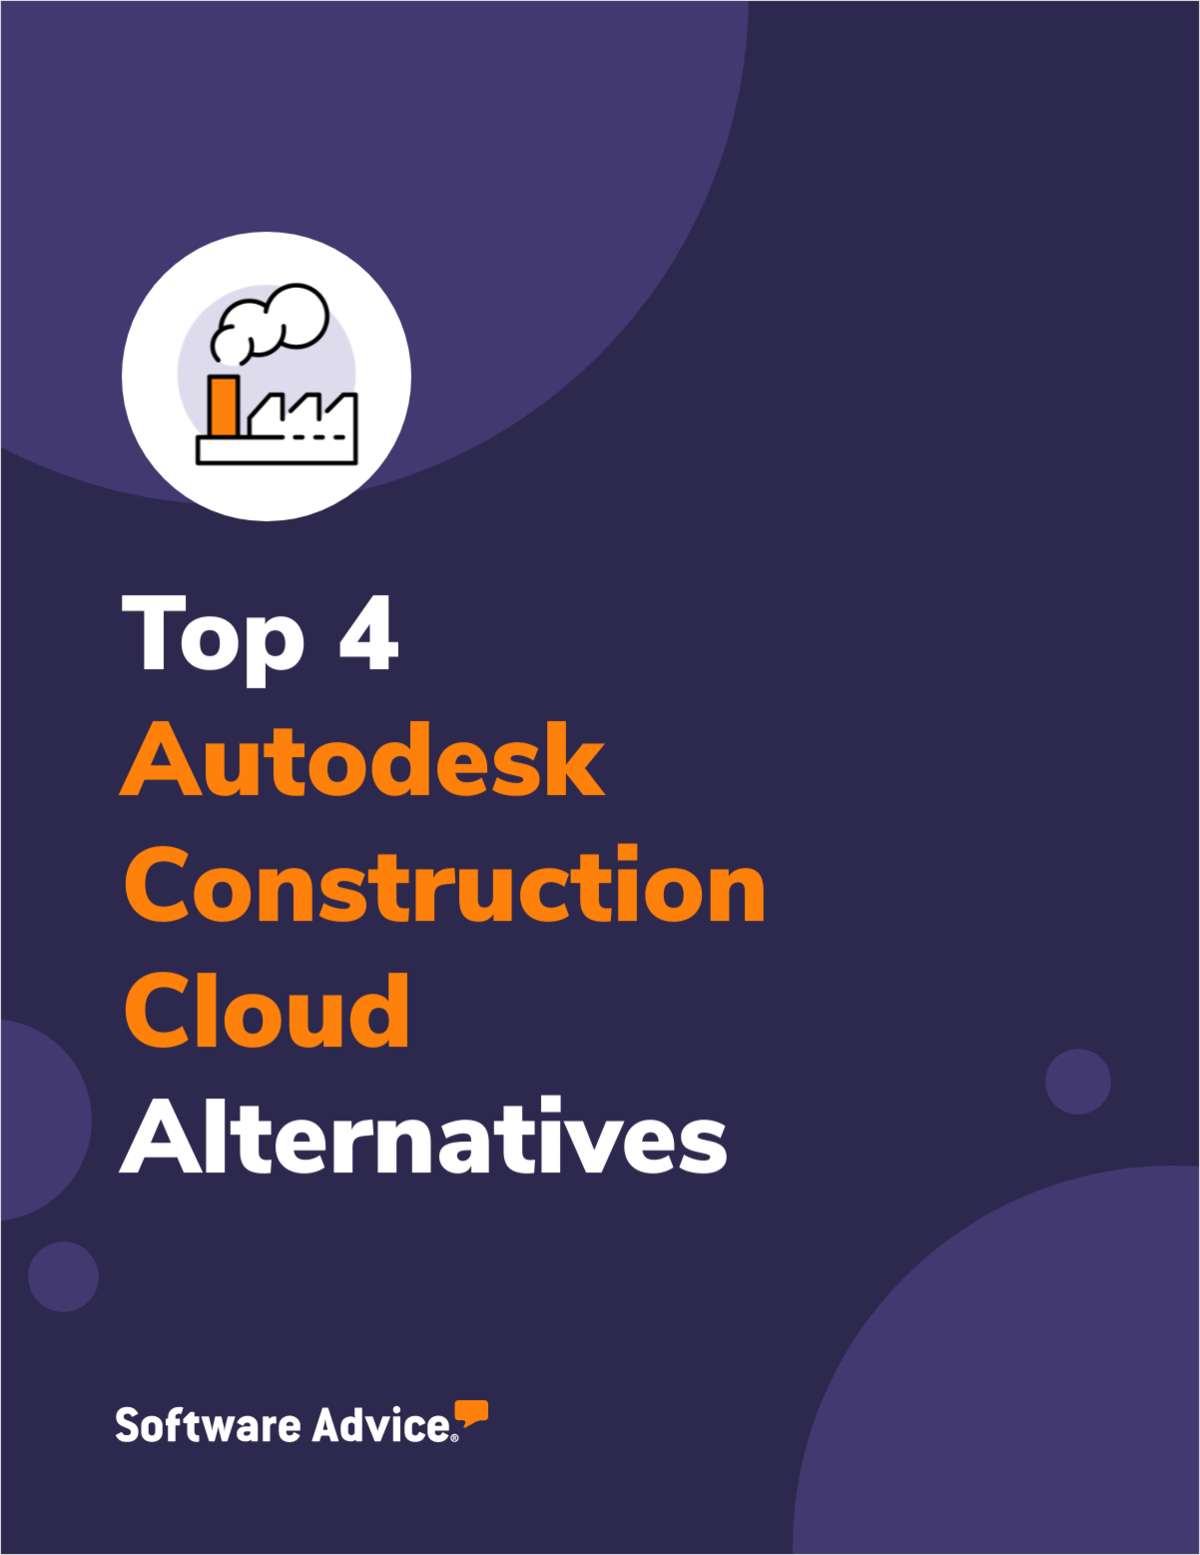 Top 4 Autodesk Construction Cloud Alternatives